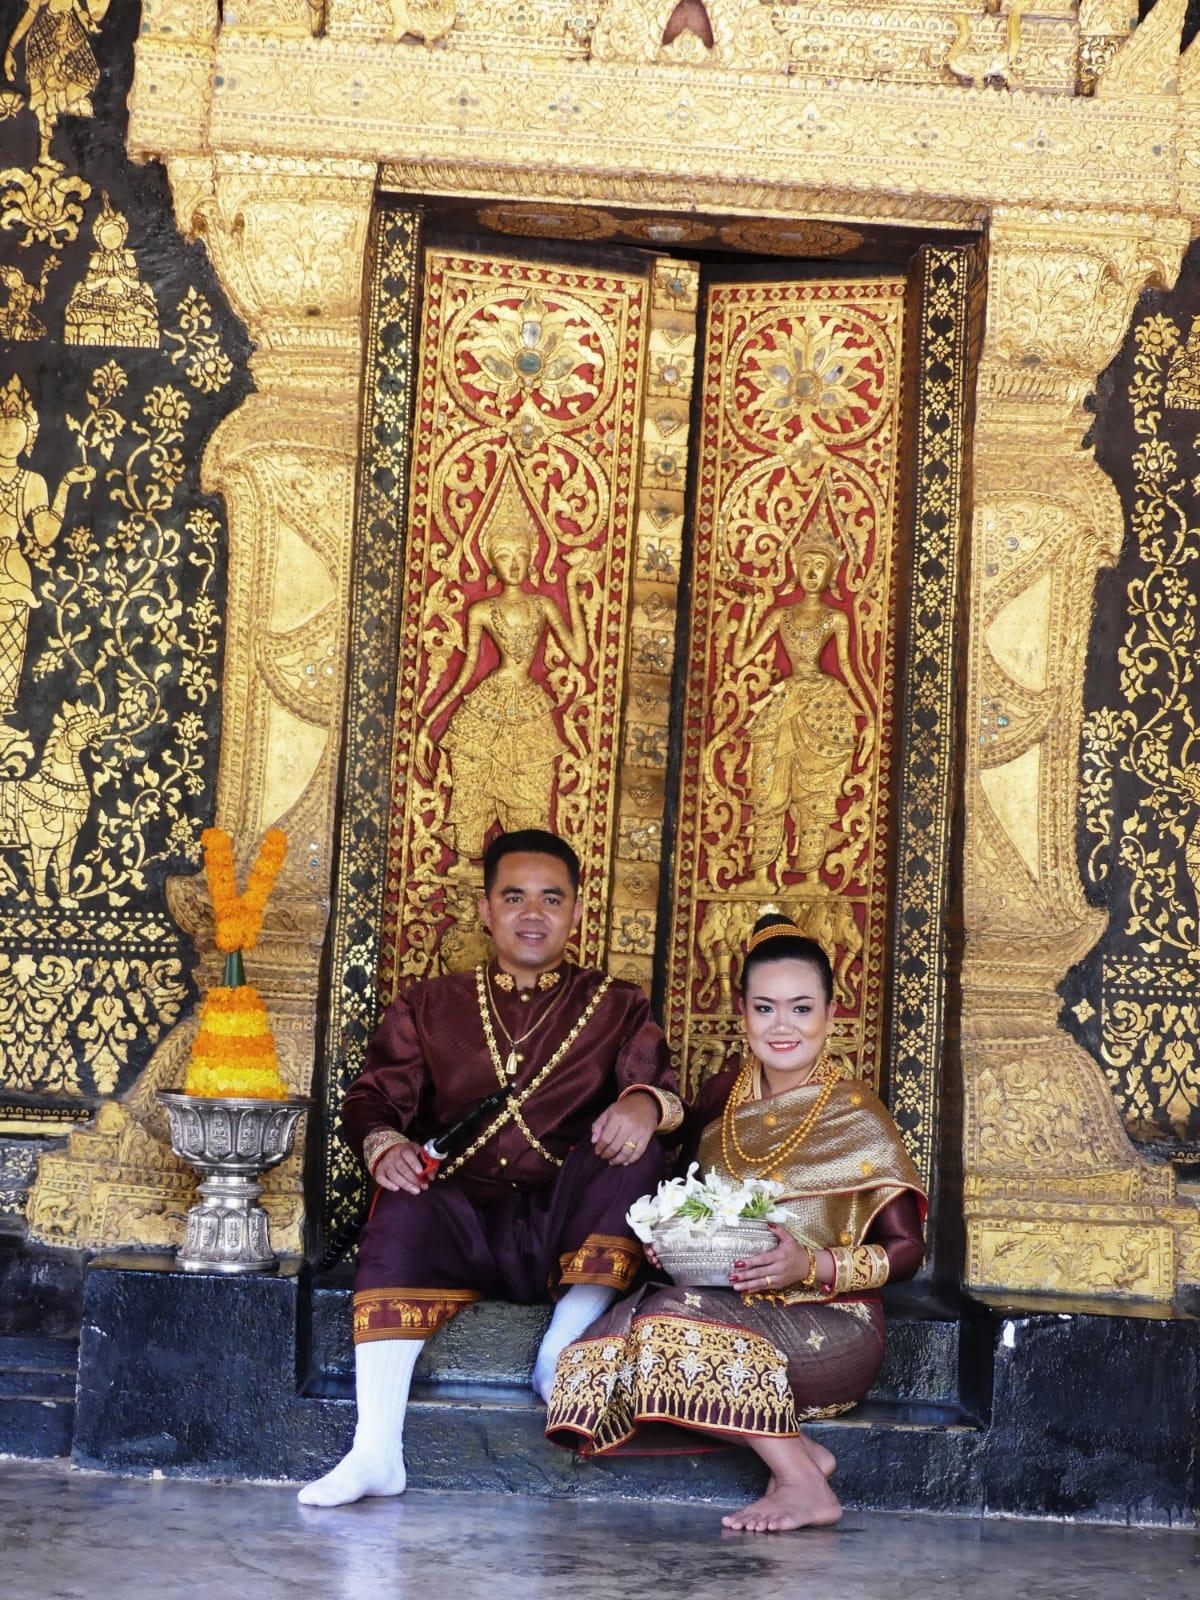 Klassische #Hochzeit in Luang Prabang 💒 #Laos! #travel #Urlaub #reise #backpacking 